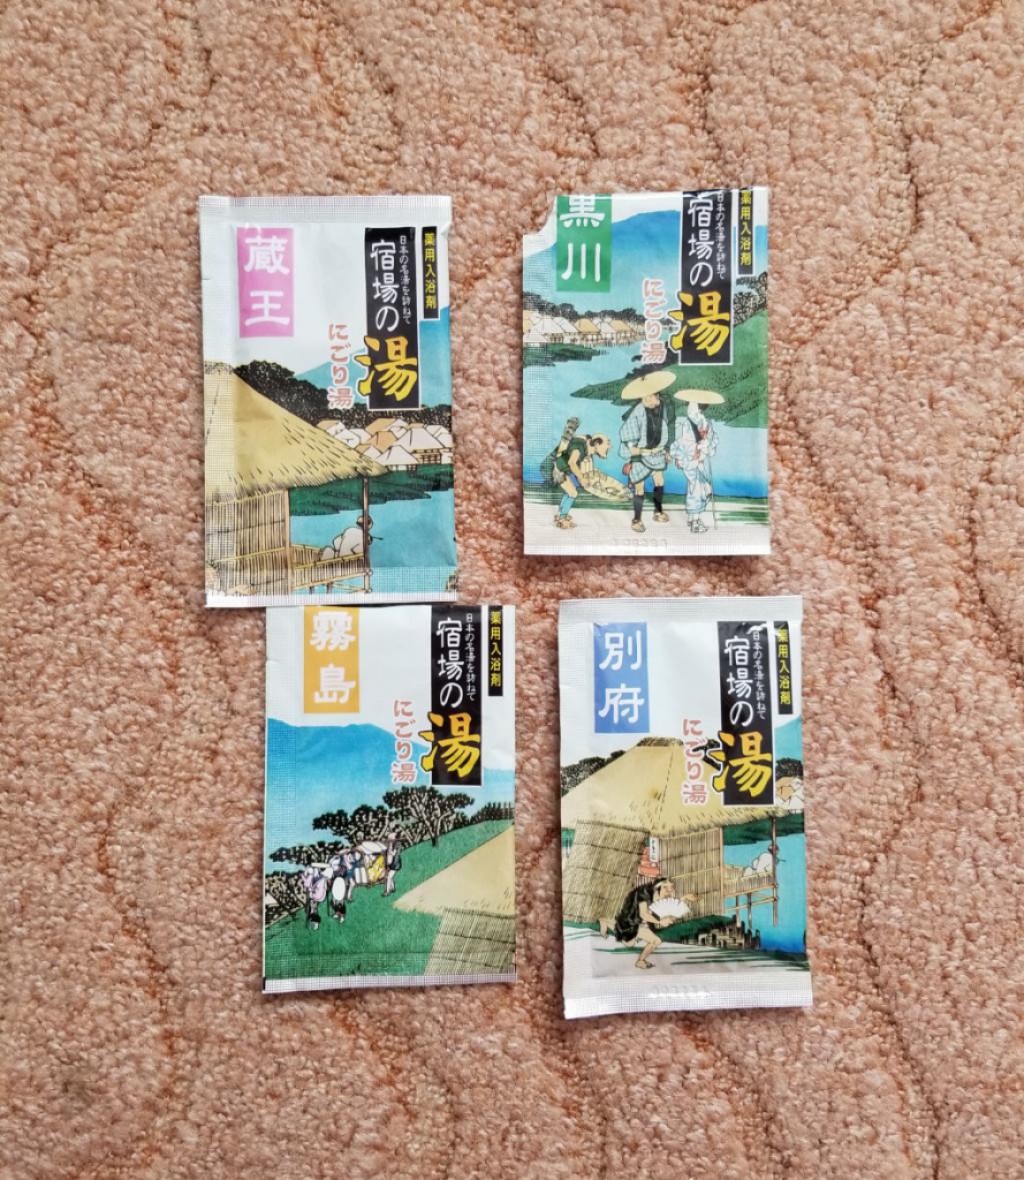 Nihon Bath Salts assorted pack ND Японская соль для ванны, 5 природных ароматов